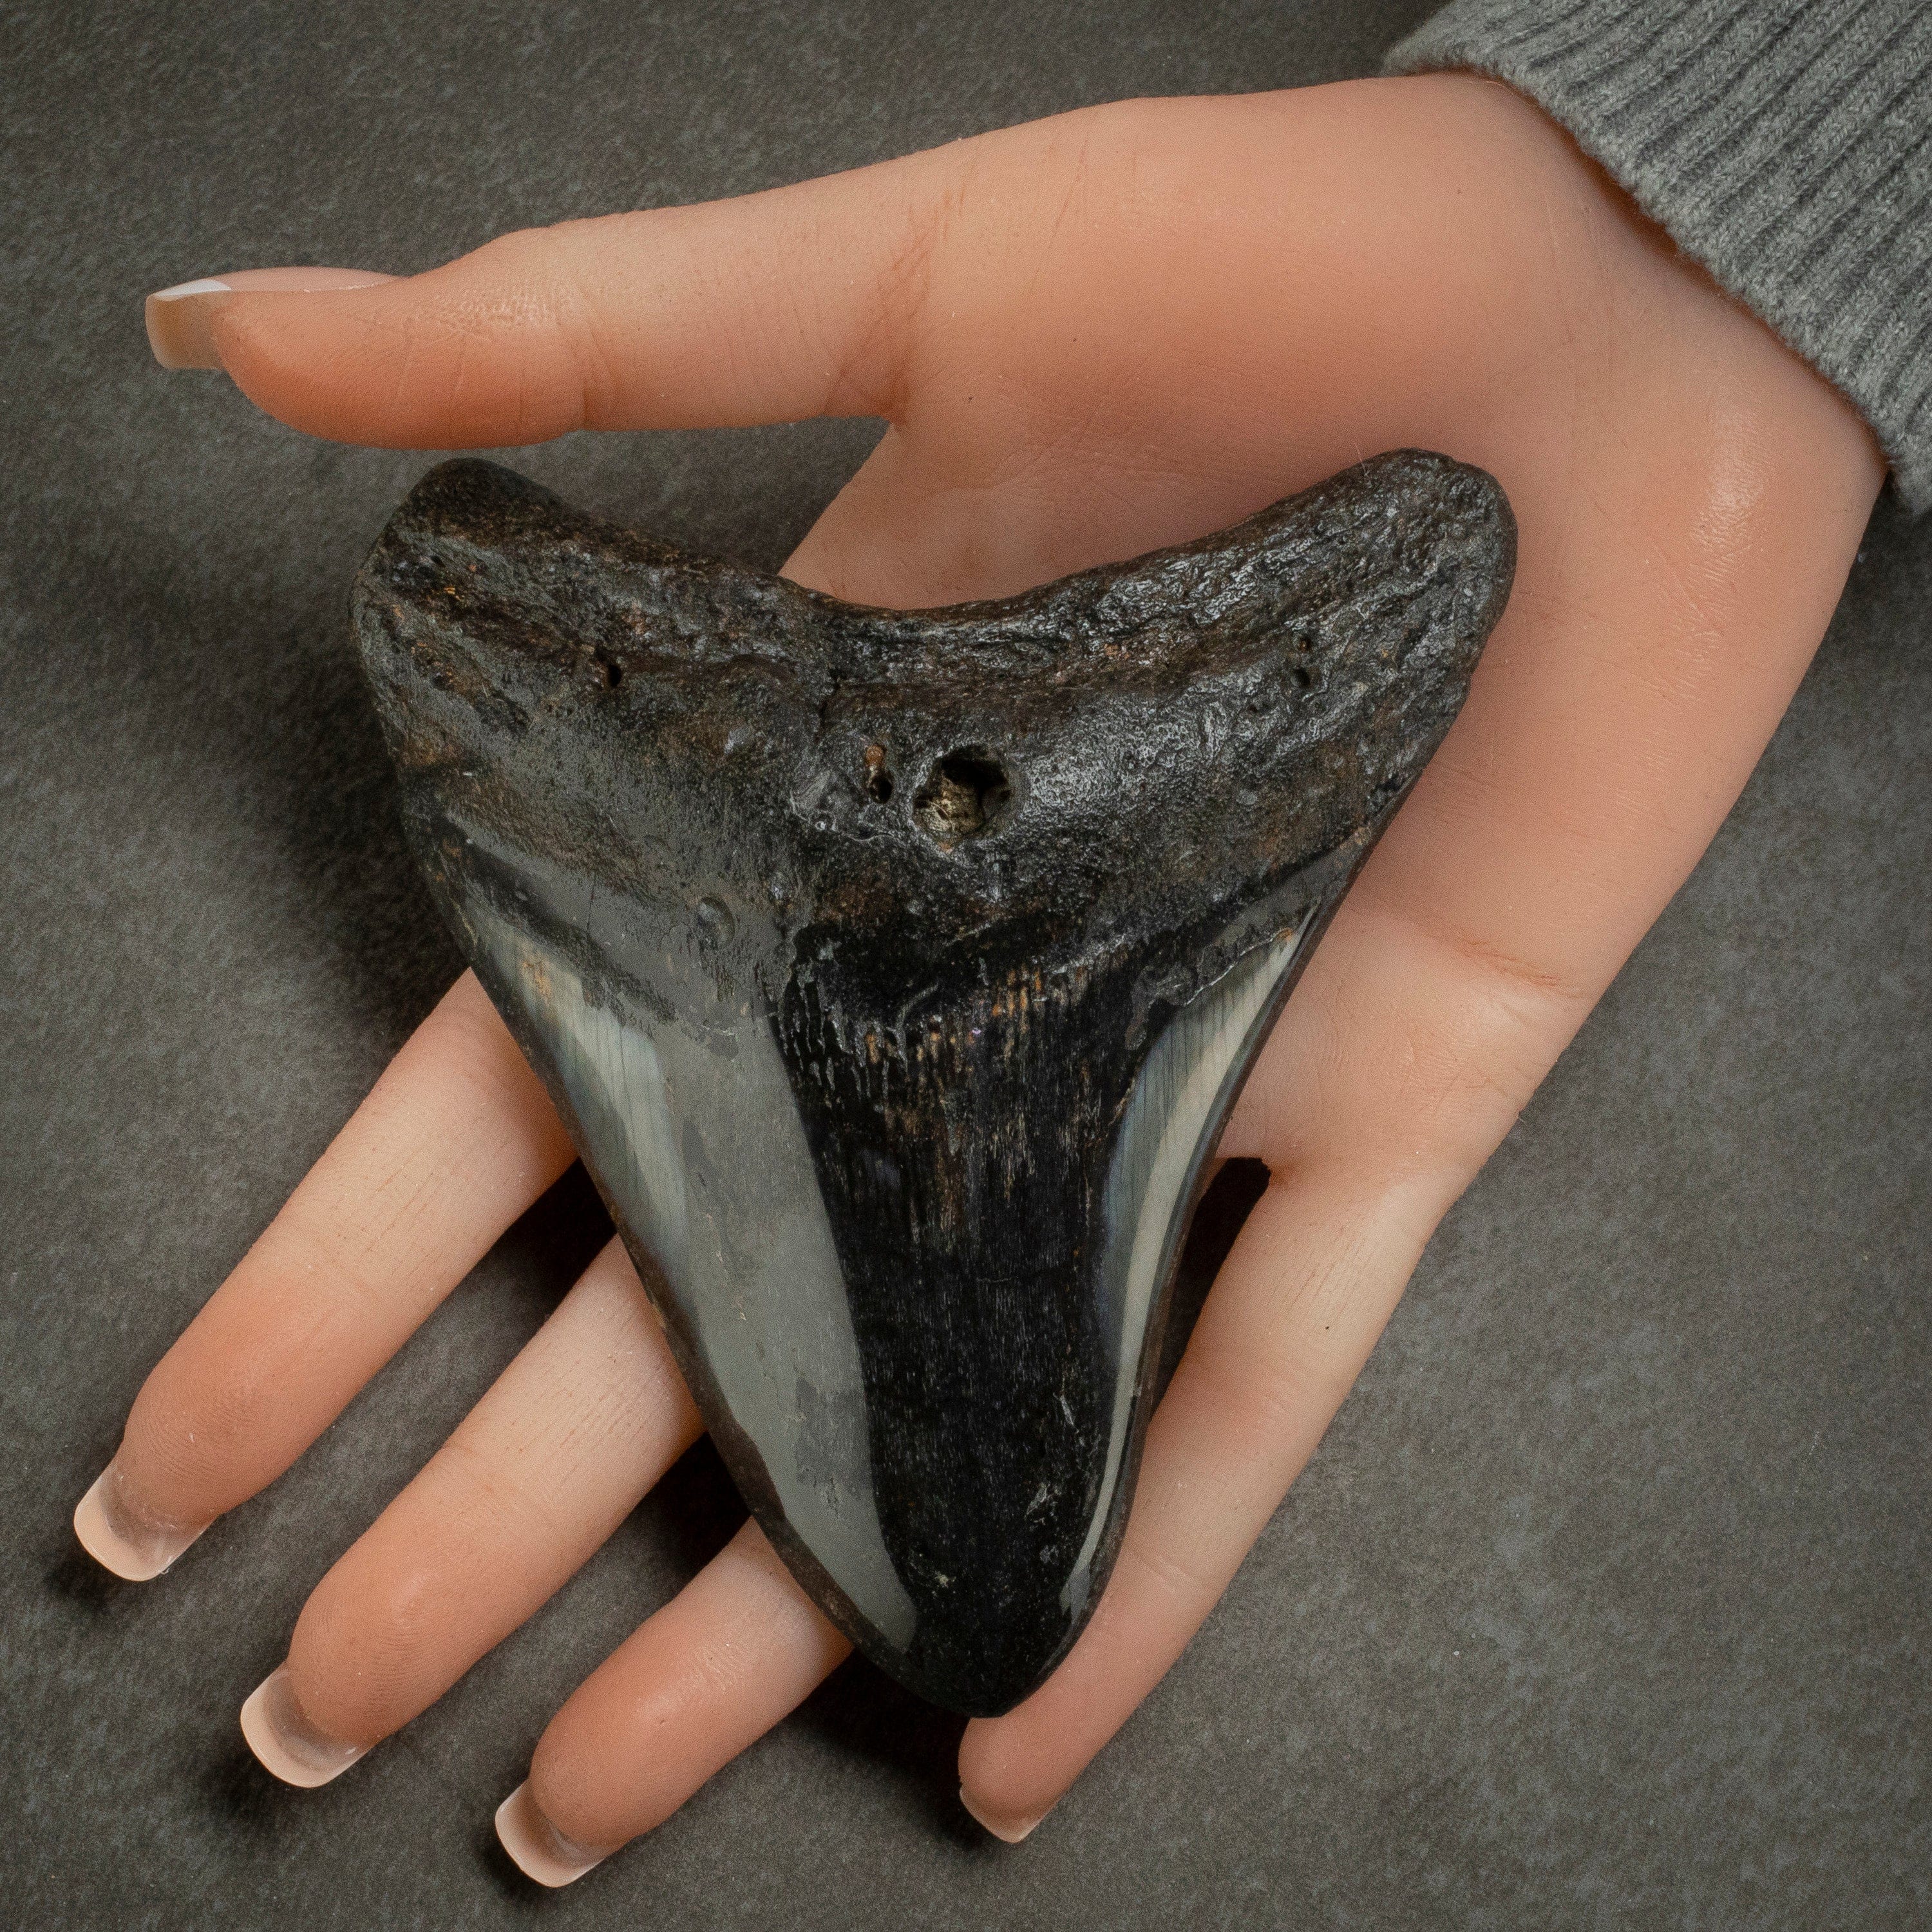 Kalifano Megalodon Teeth Megalodon Tooth from South Carolina - 4.3" ST2000.117